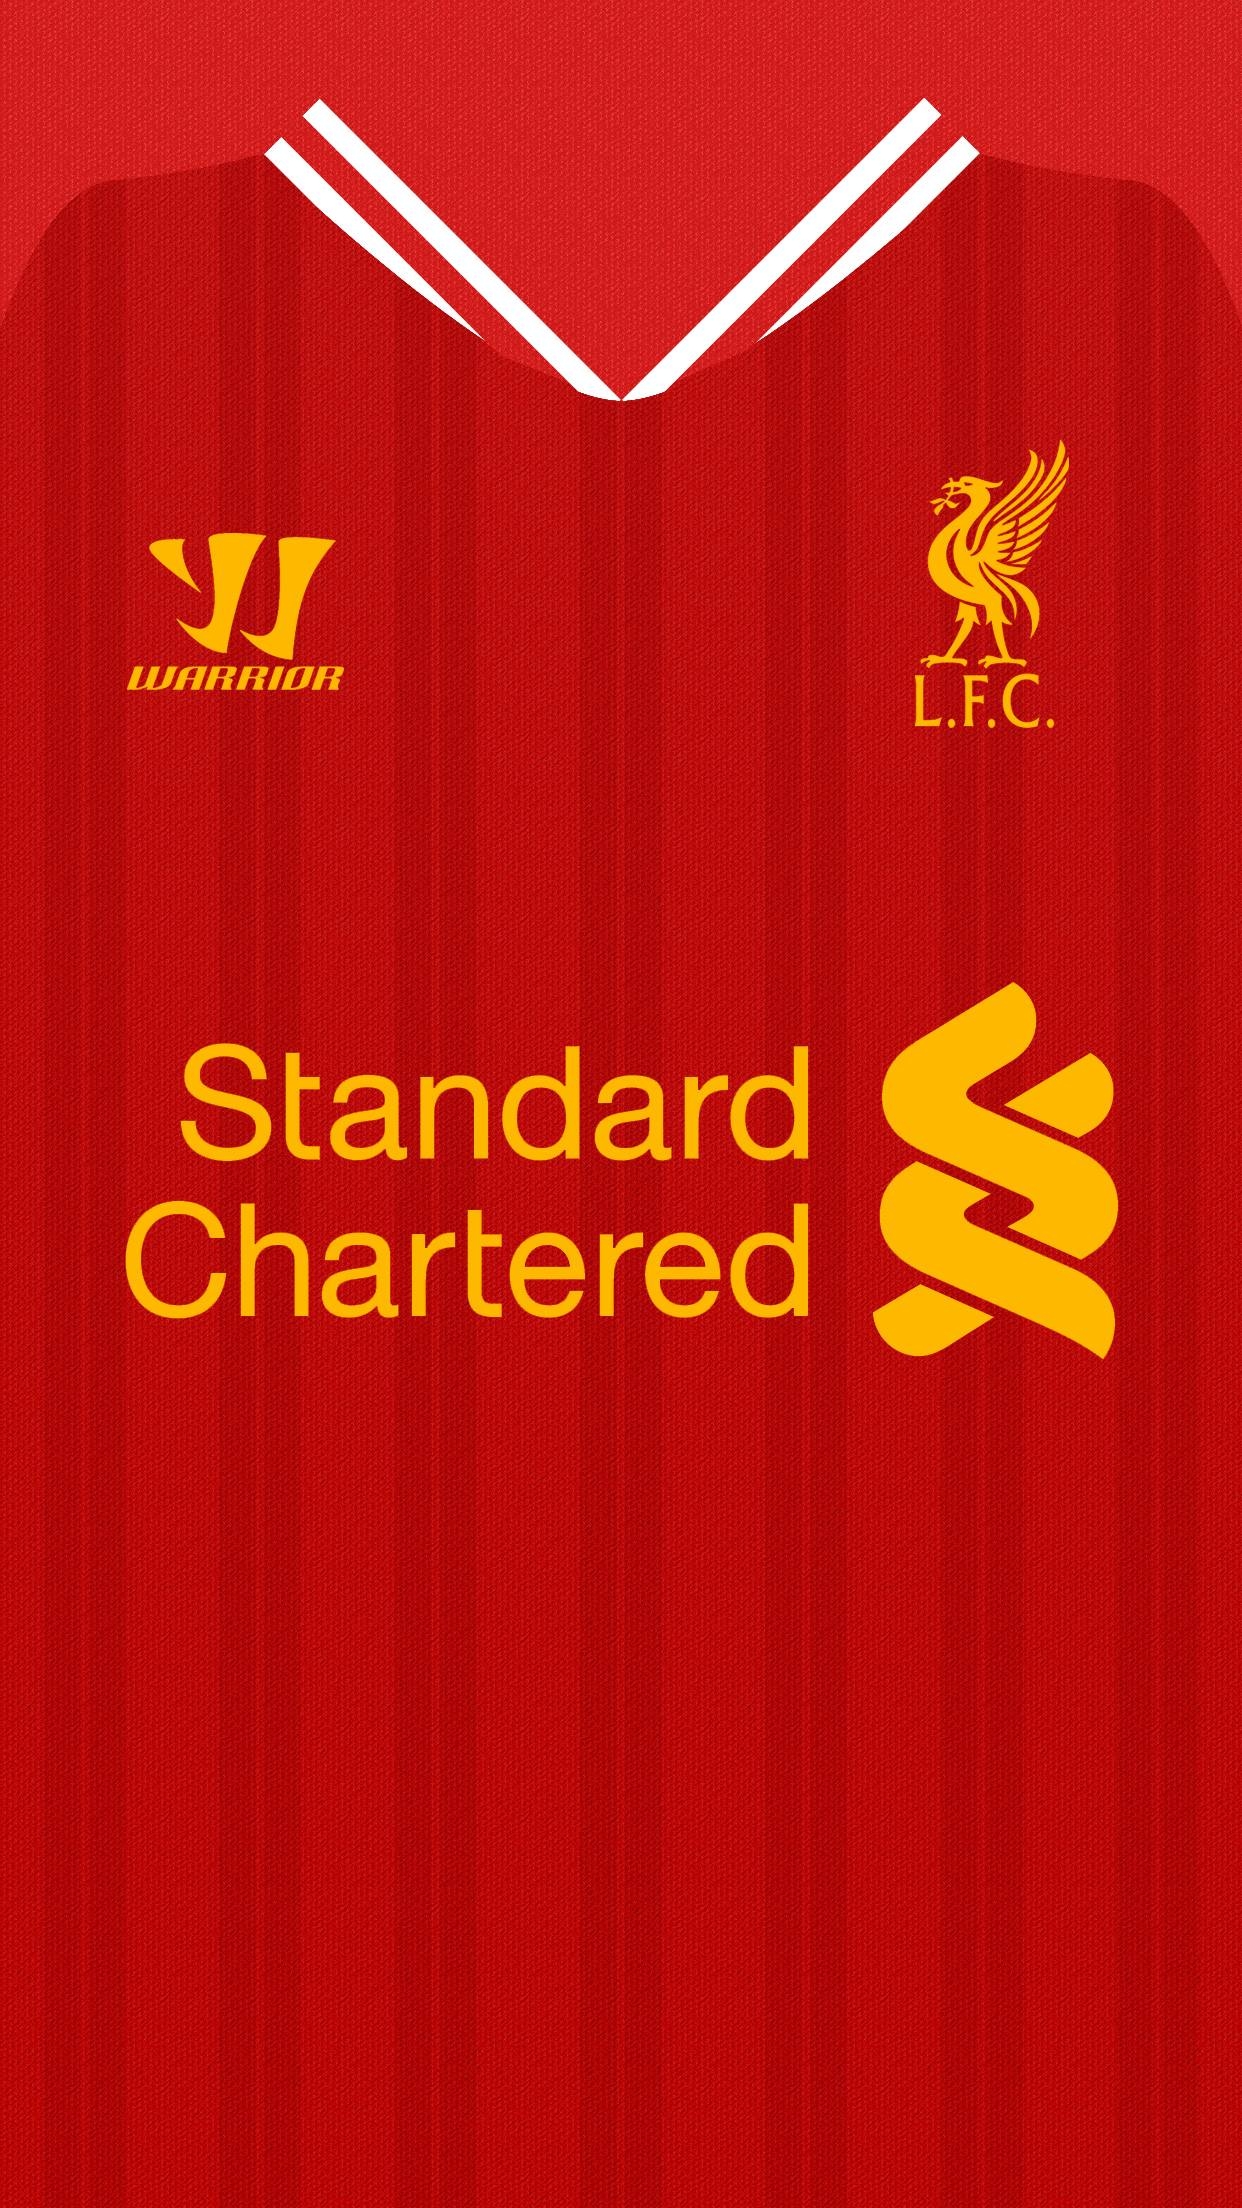 Liverpool Fc Wallpaper Reddit - Standard Chartered Logo White - HD Wallpaper 